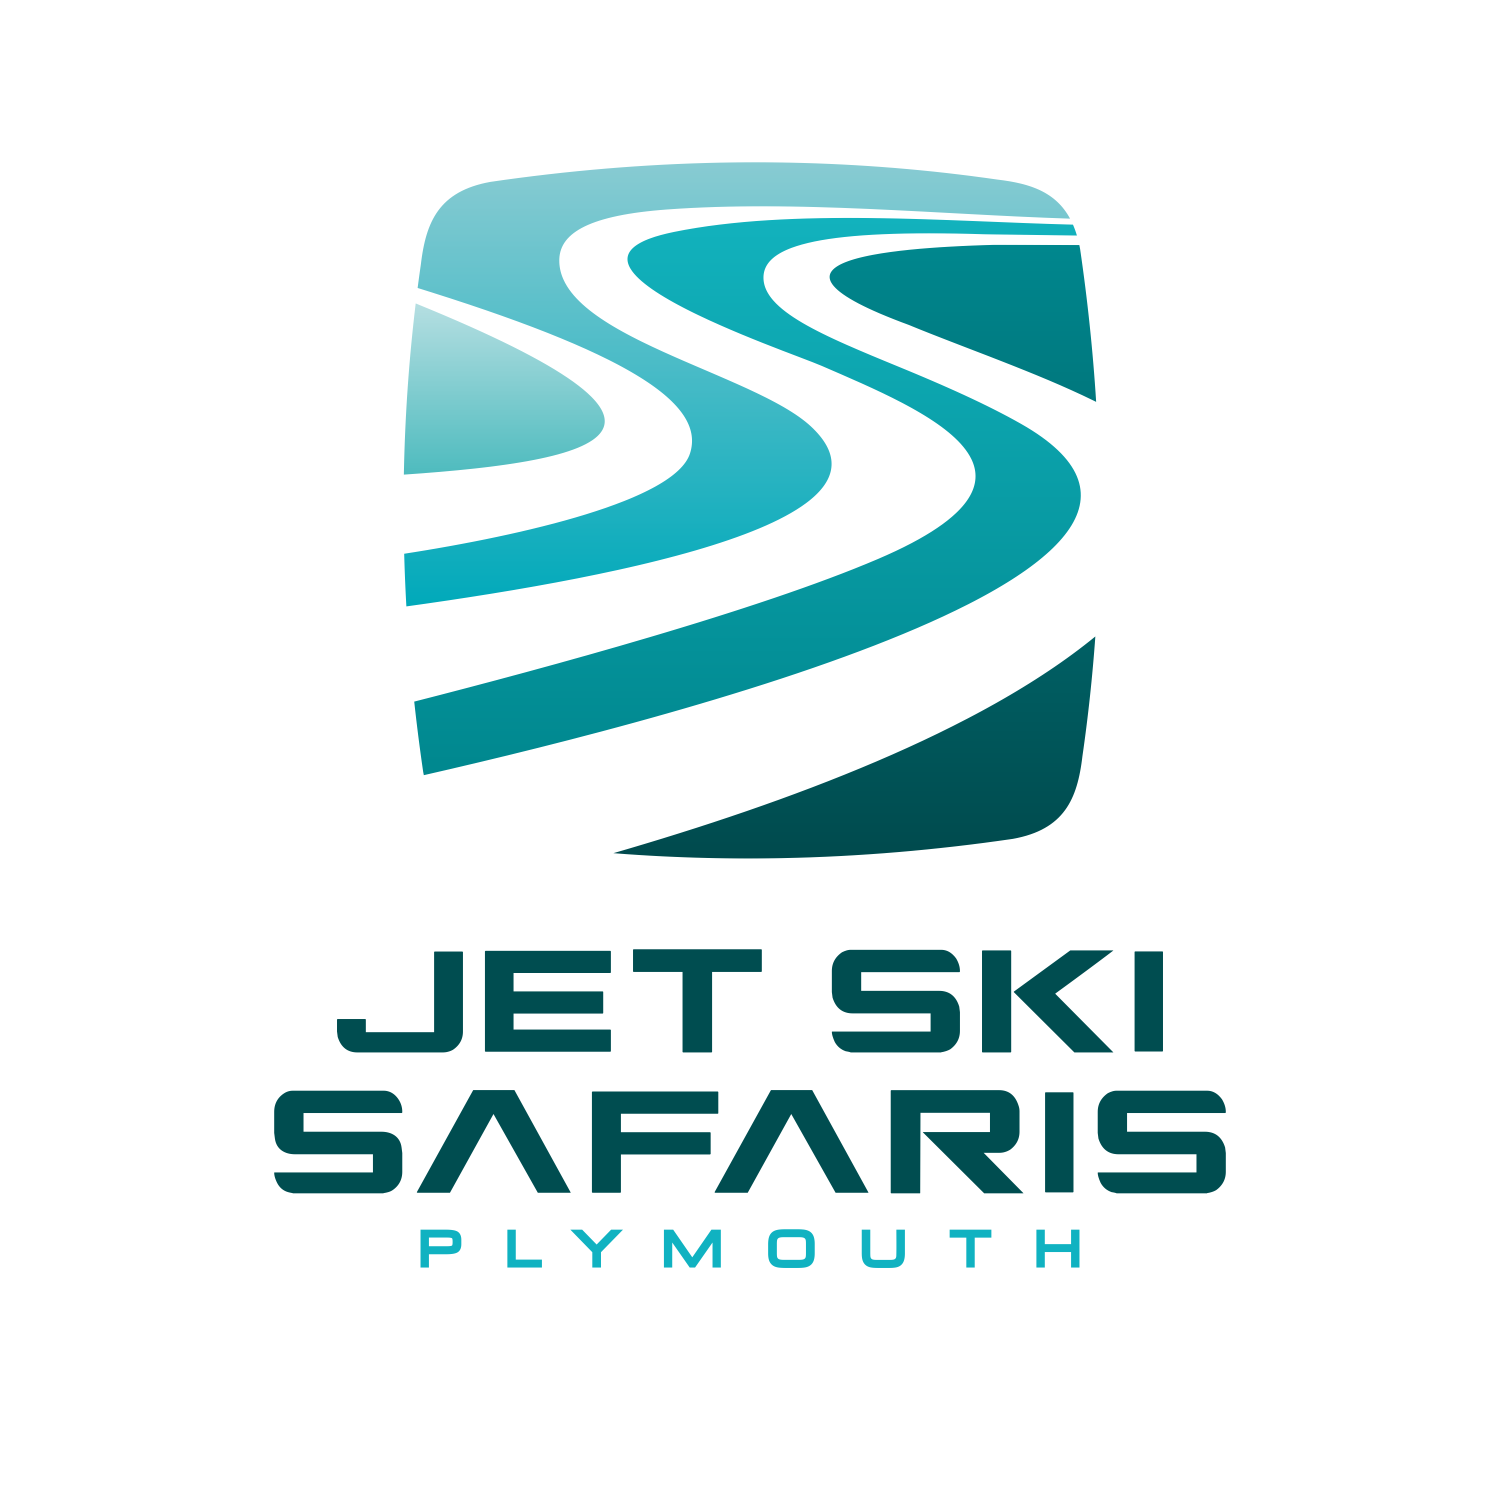 Jet Ski Safaris Plymouth